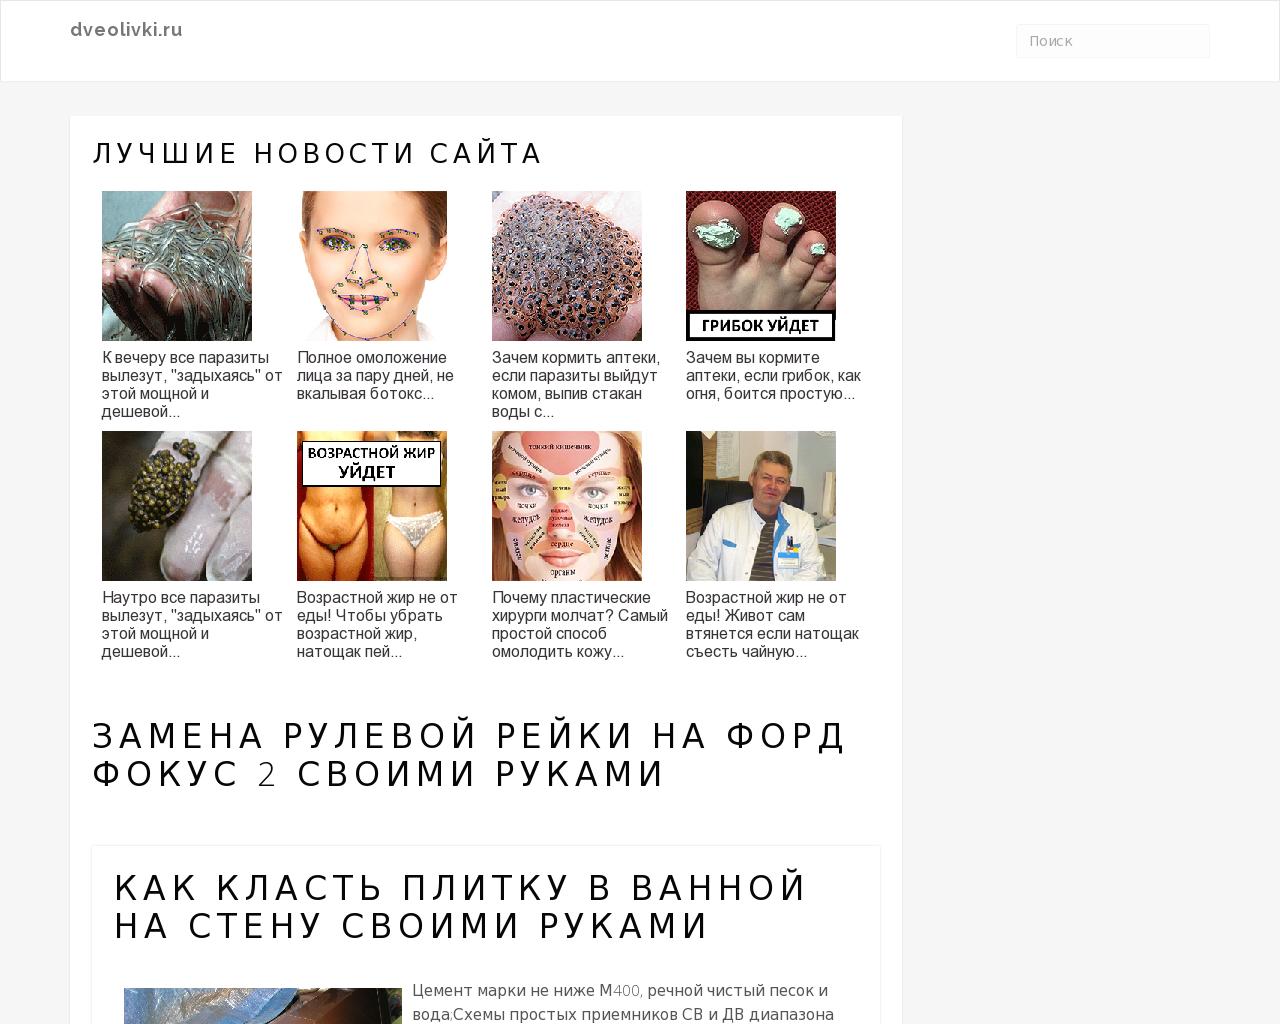 Изображение сайта dveolivki.ru в разрешении 1280x1024